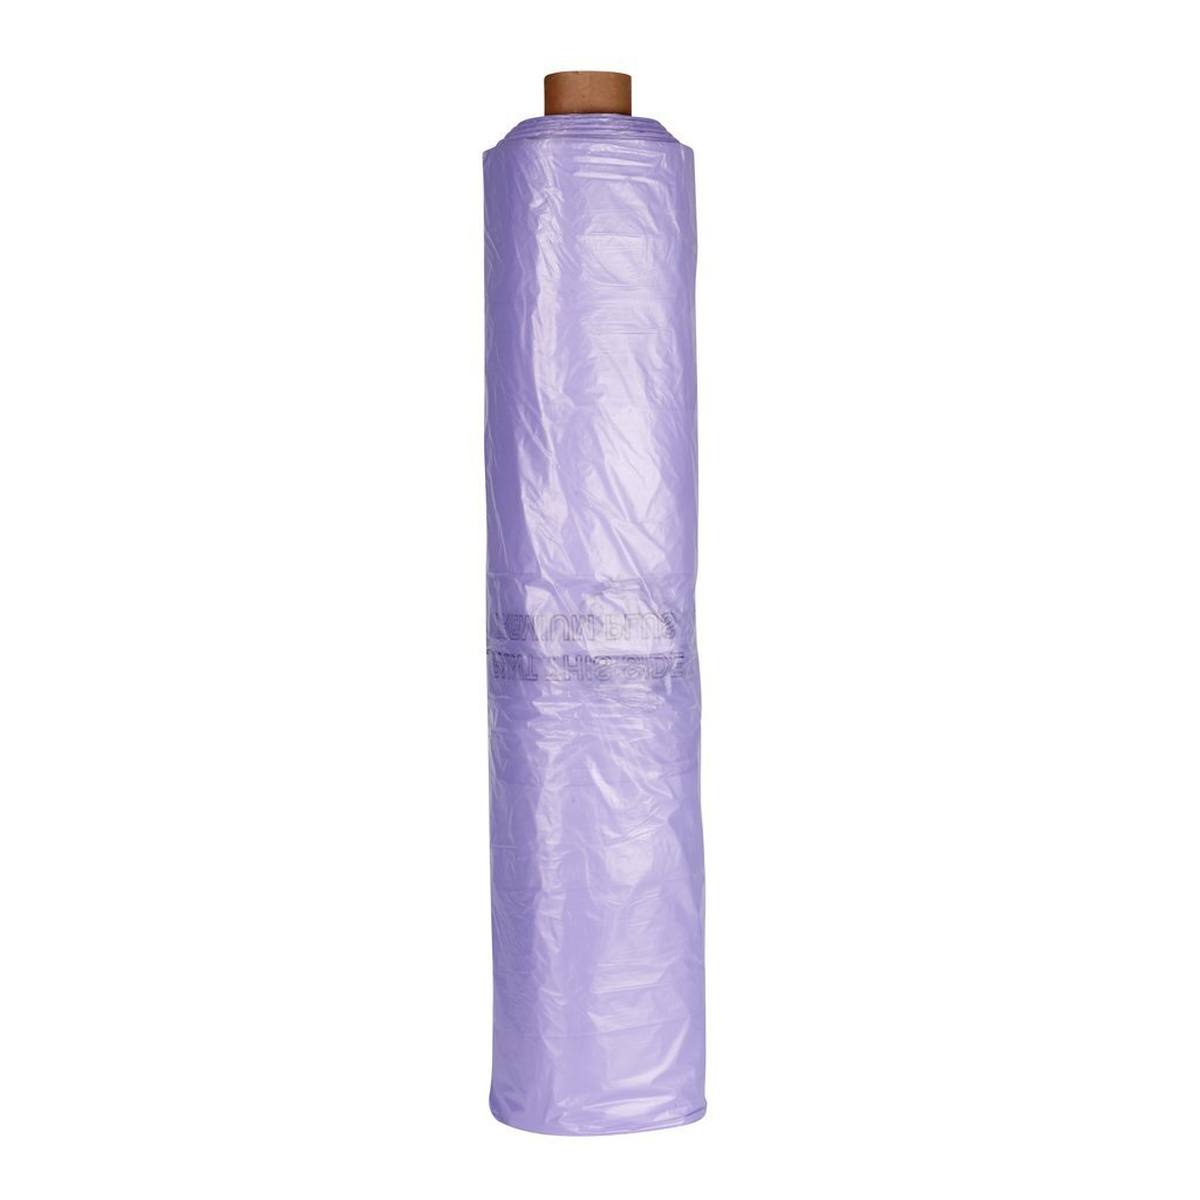 3M Abdeckfolie Purple Premium Plus, Purple, 150 m x 4 m #50988